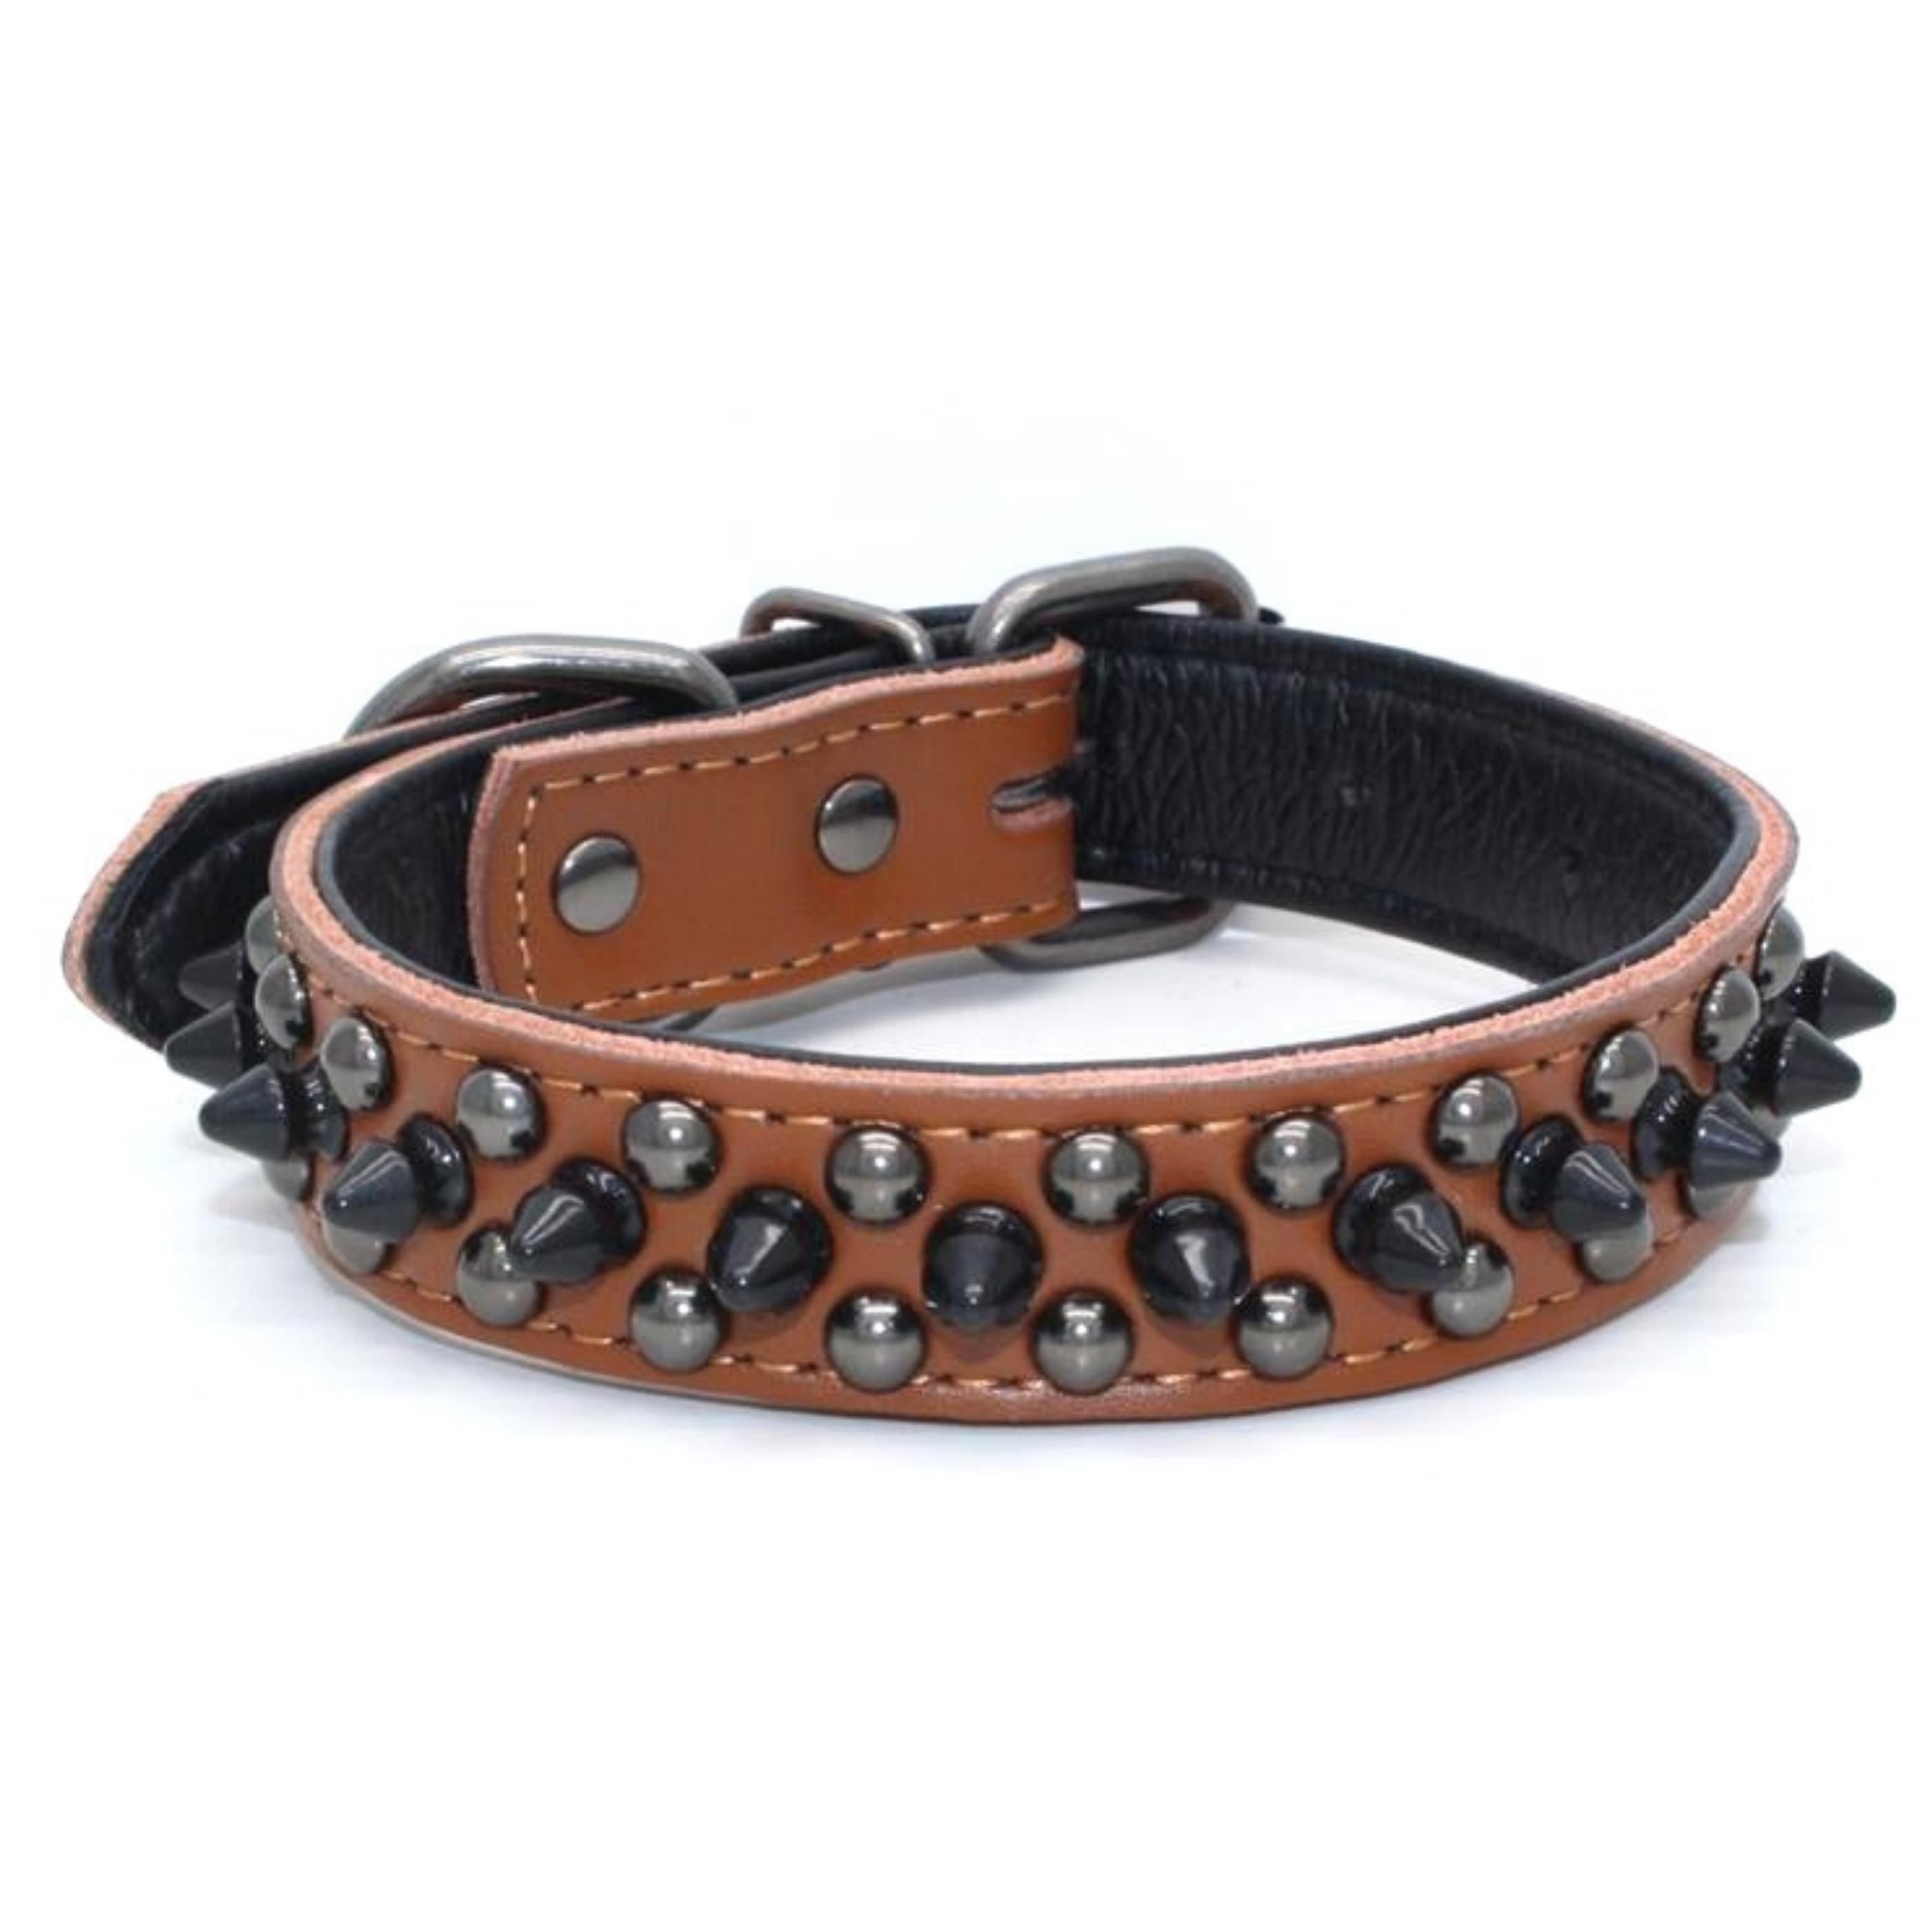 Adjustable Crystal Studded Leather Pet Collar